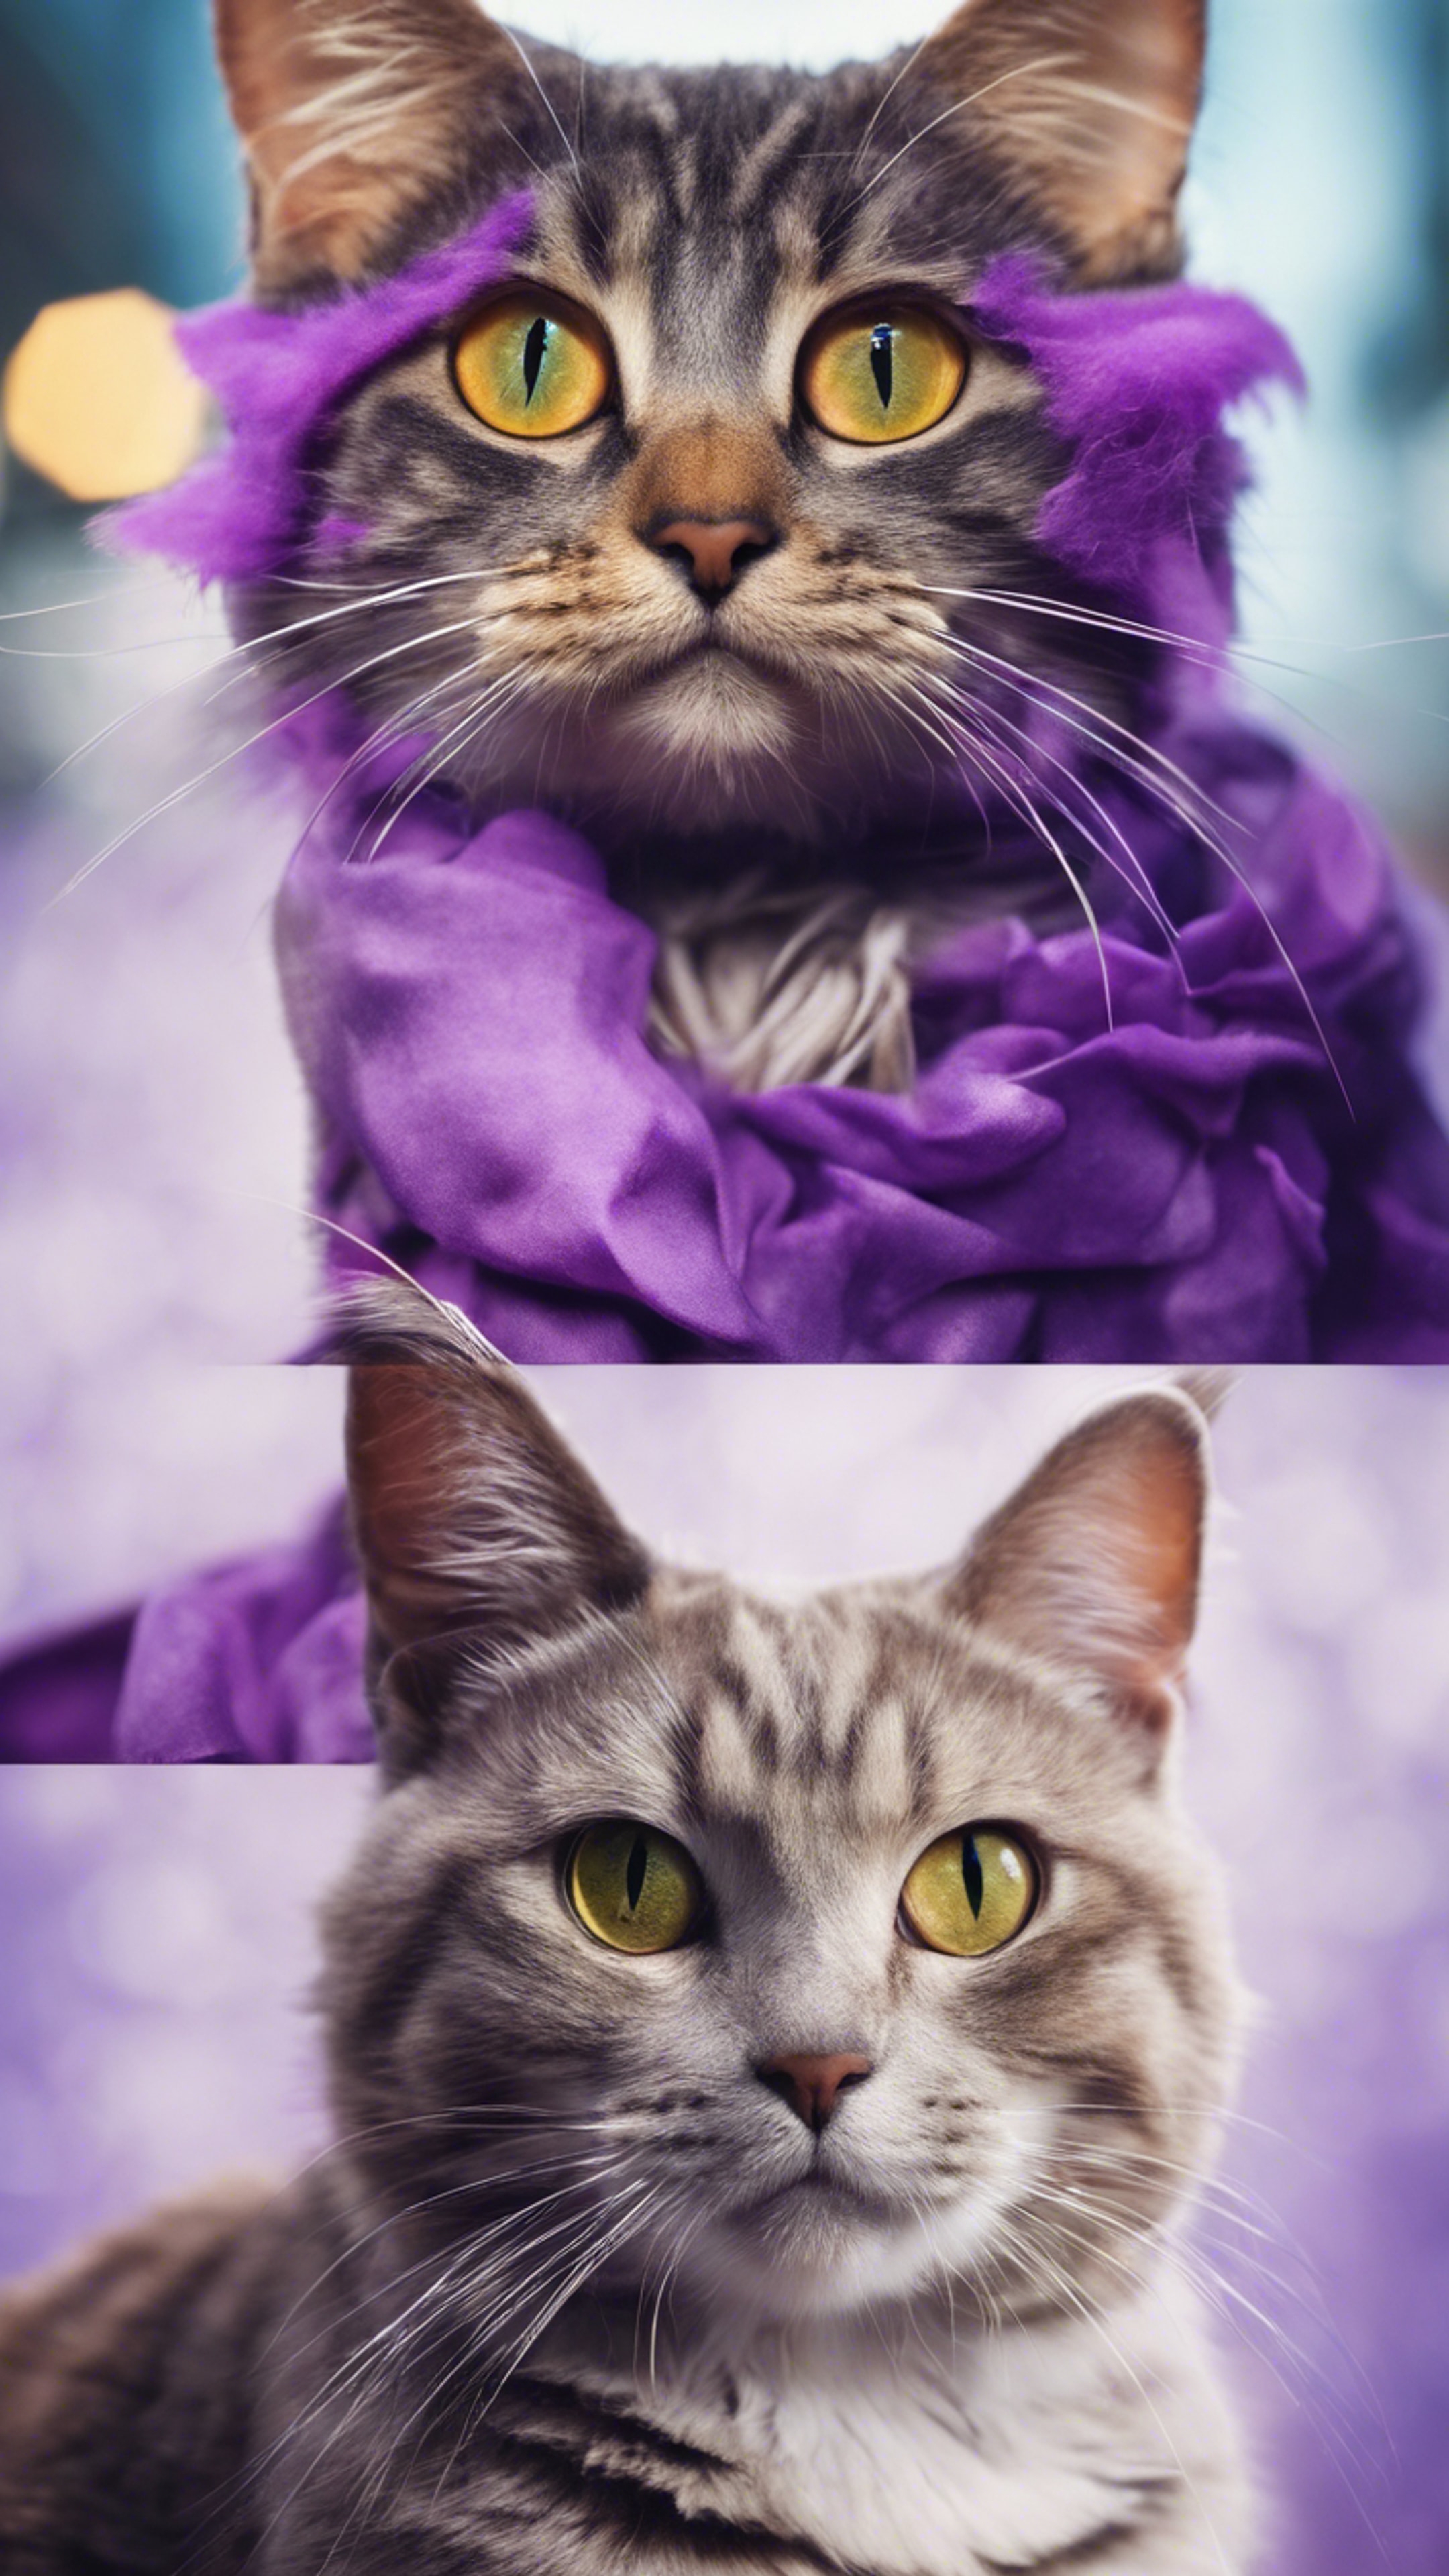 A playful collage showcasing various breeds of cats, all with unusual purple fur. duvar kağıdı[3a46628192d3463088be]